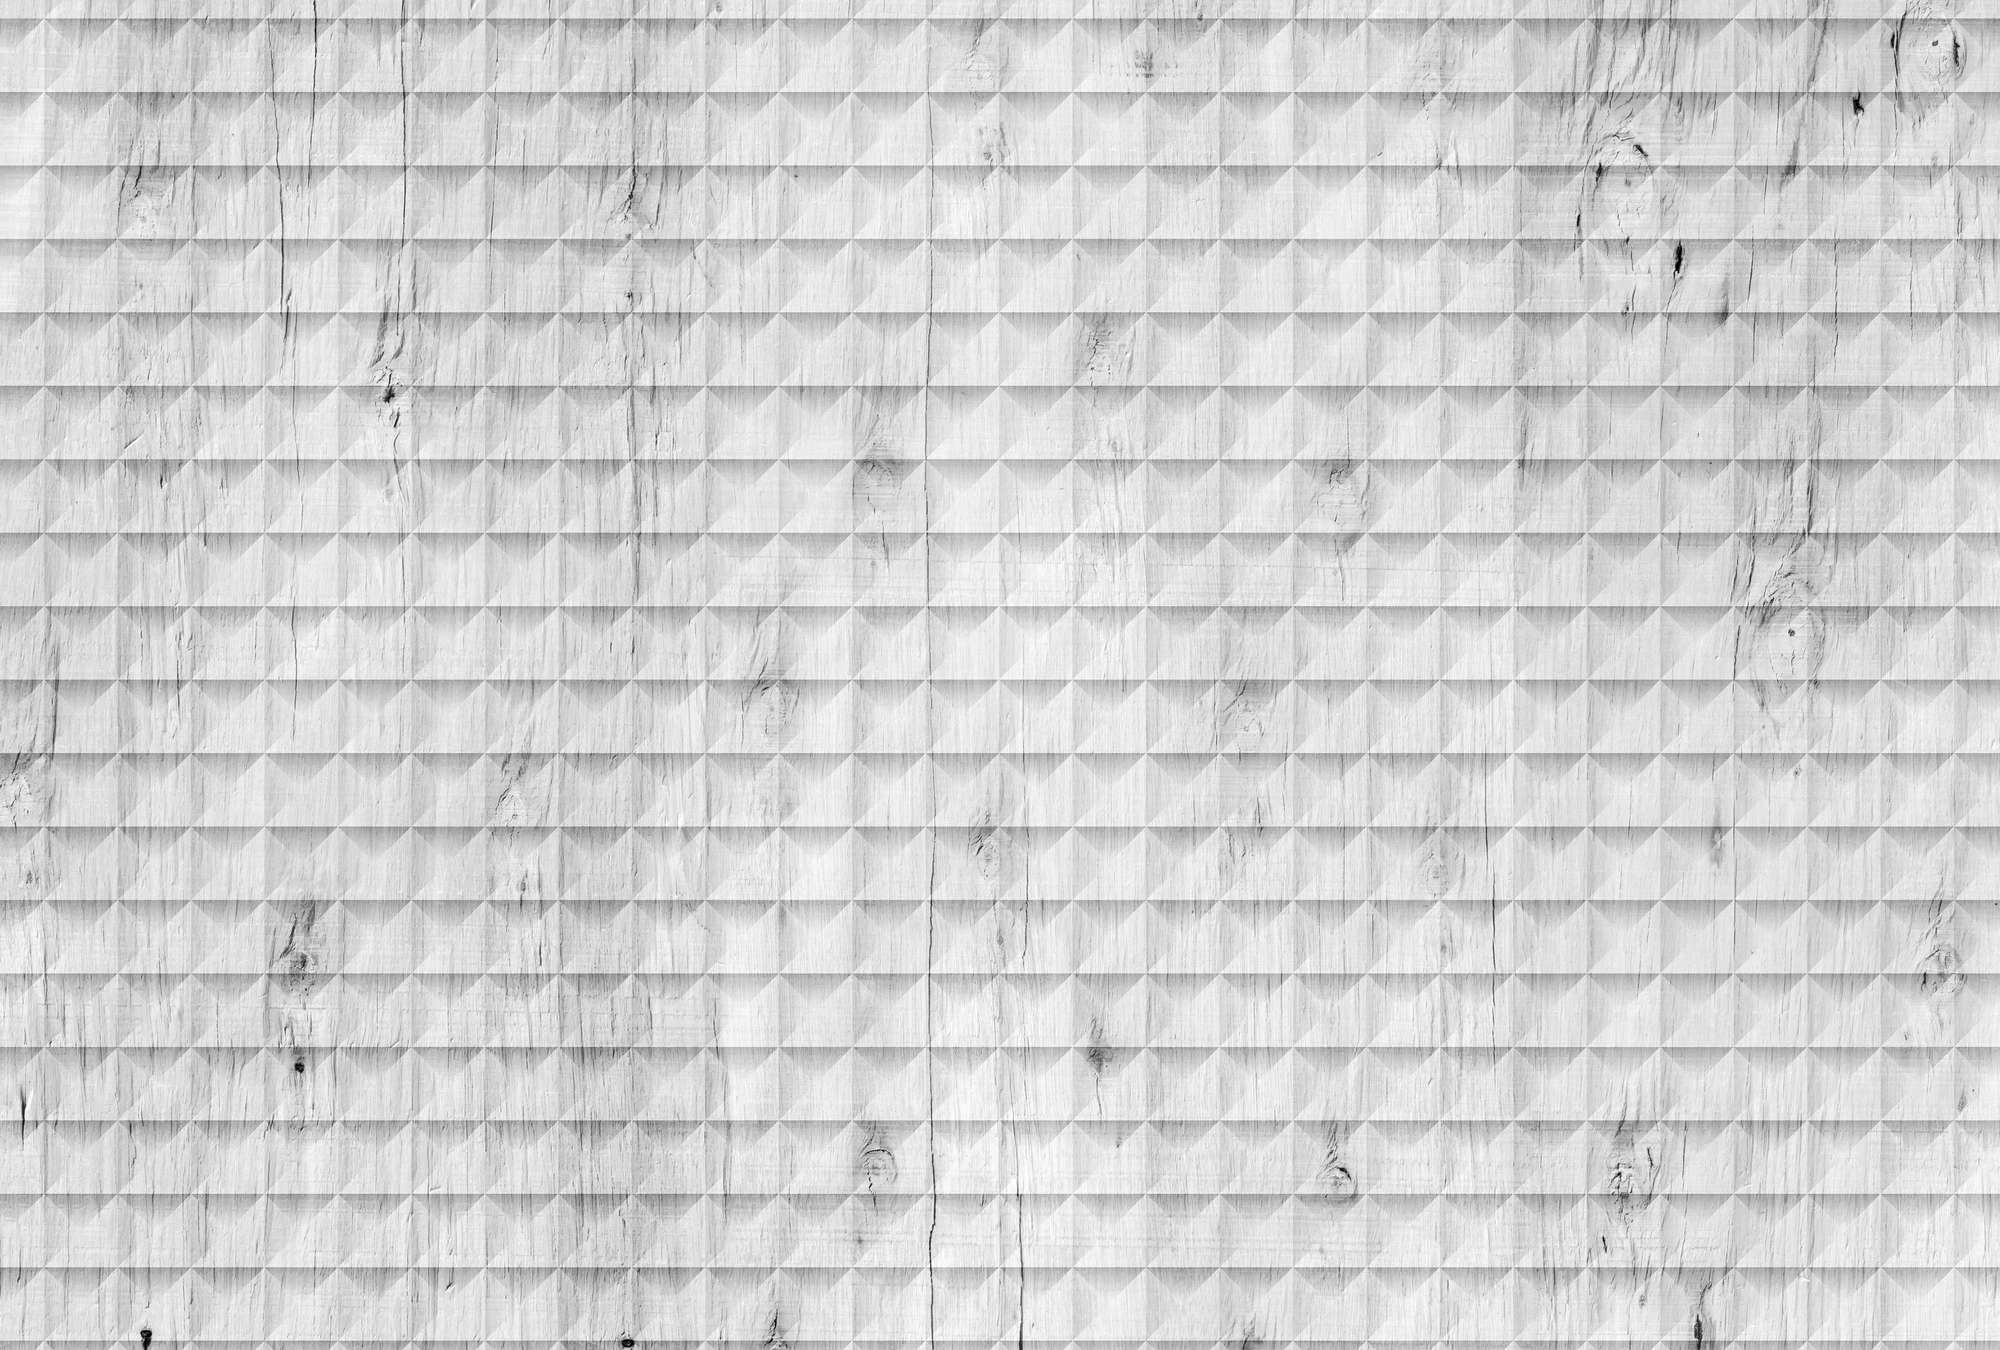             White wood mural, grain & geometric pattern - white, grey, black
        